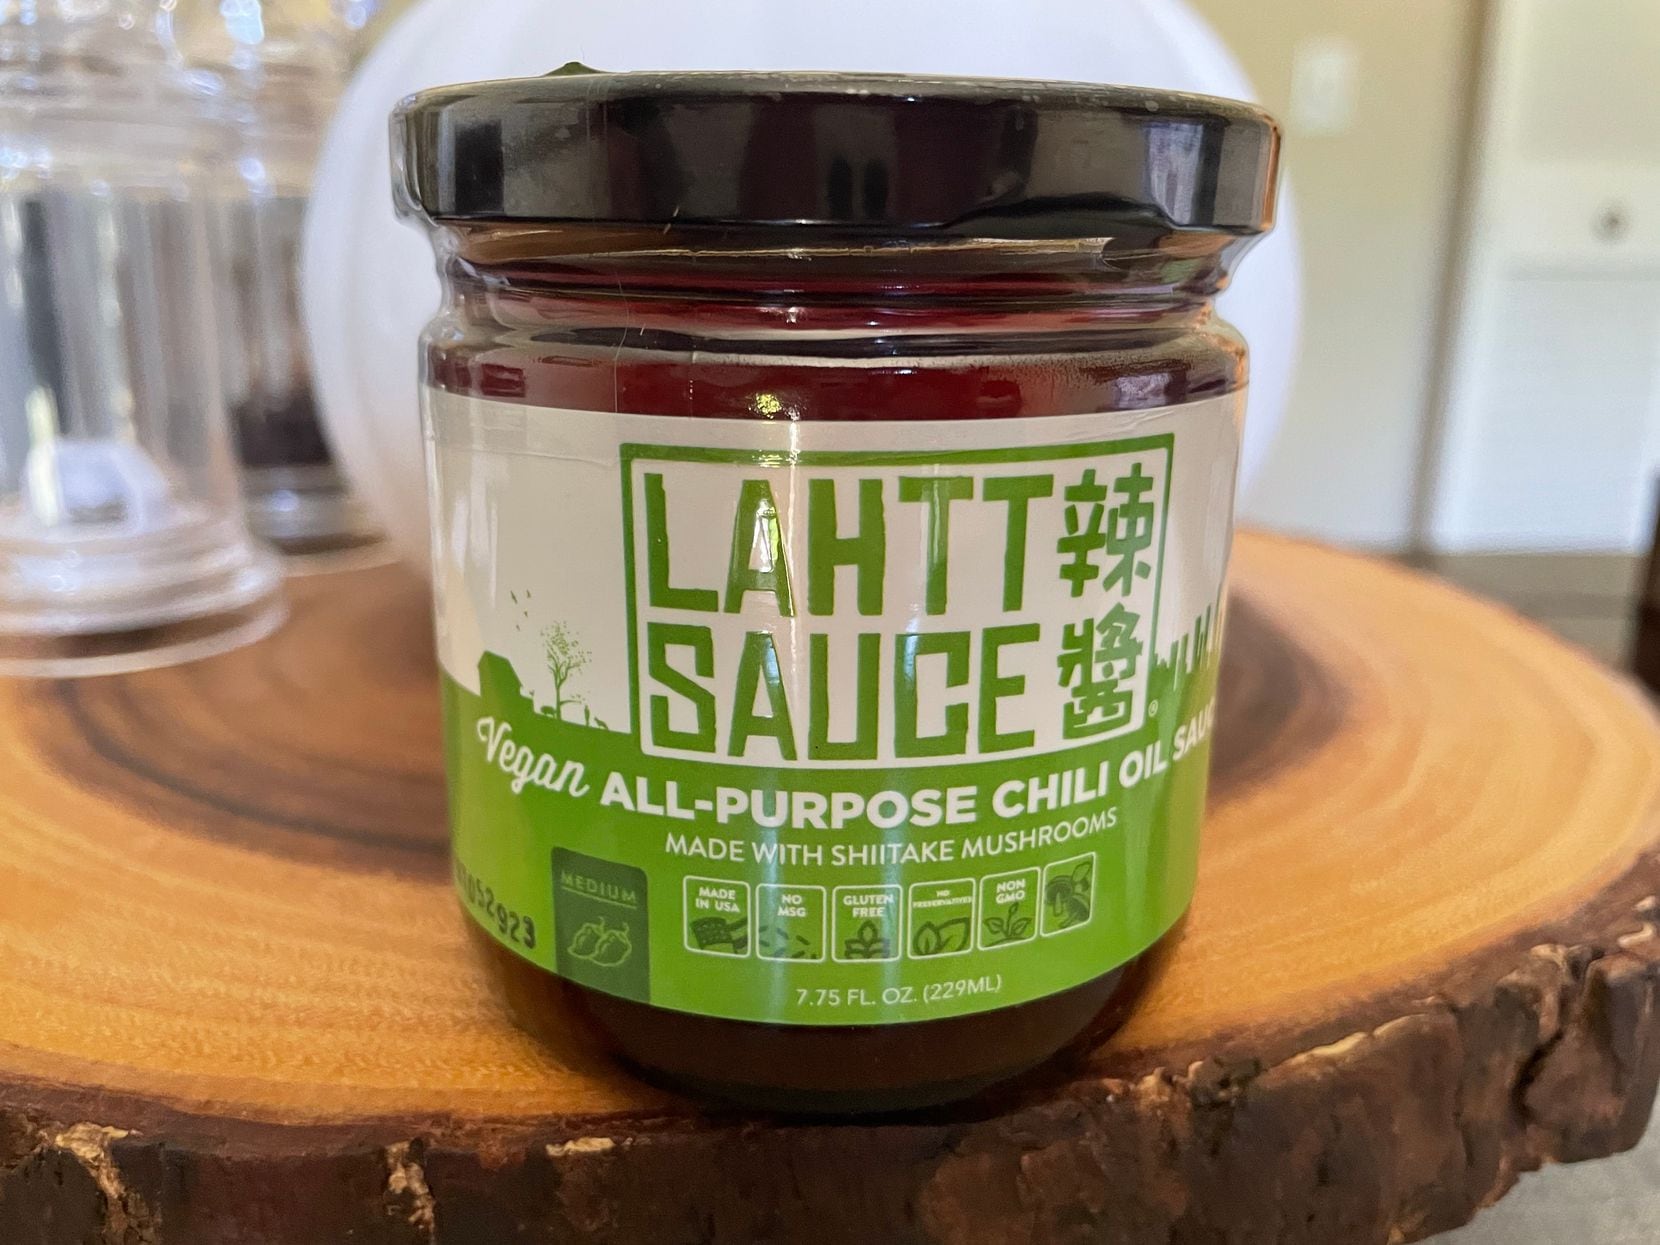 California-based Lahtt Sauce is a vegan all-purpose chili oil sauce